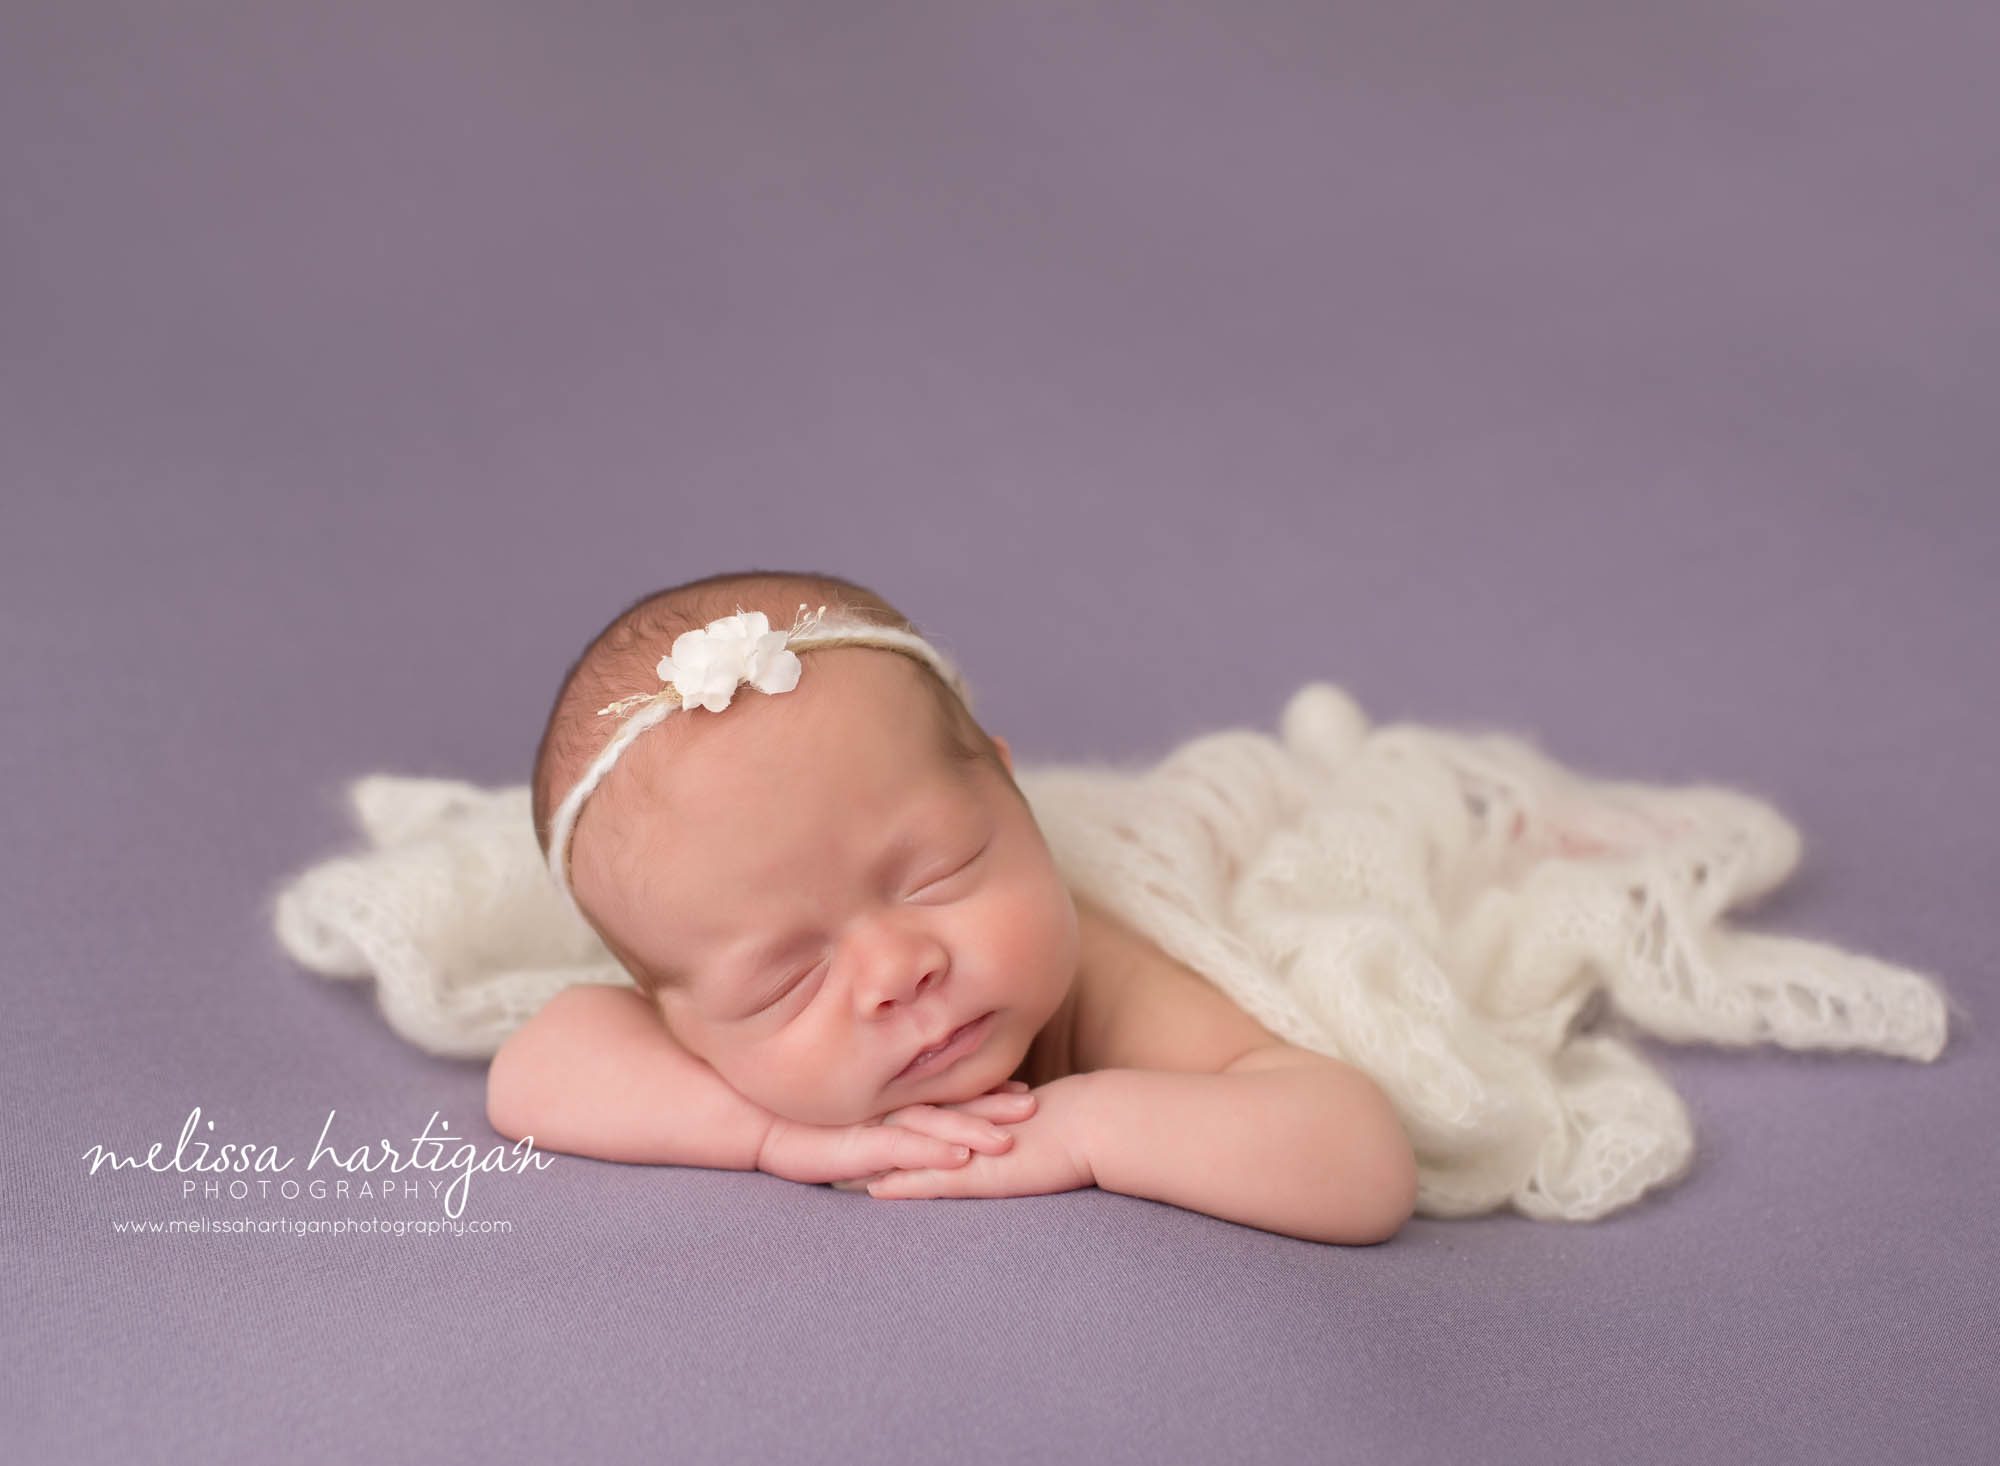 newborn baby girl posed on tummy on purple backdrop with cream drape layer and cream headband